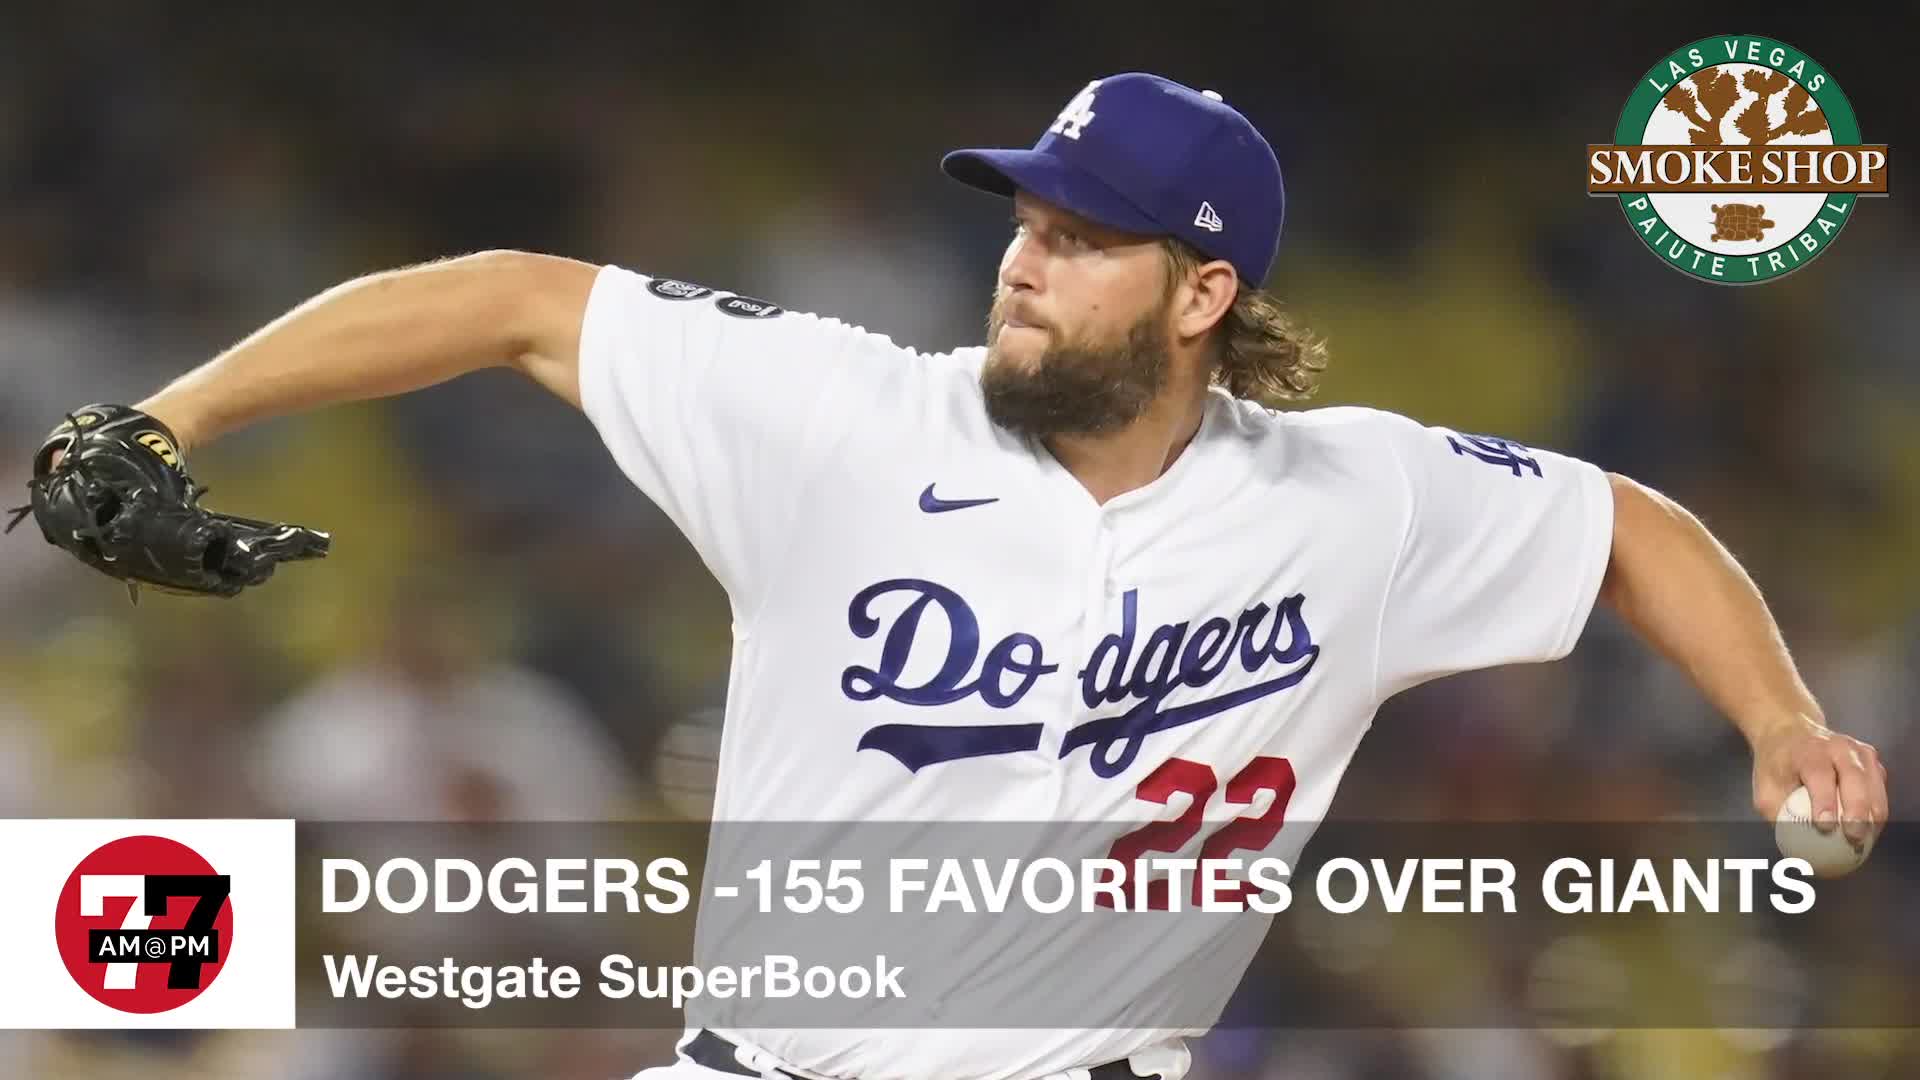 7@7PM Dodgers -155 Favorites Over Giants